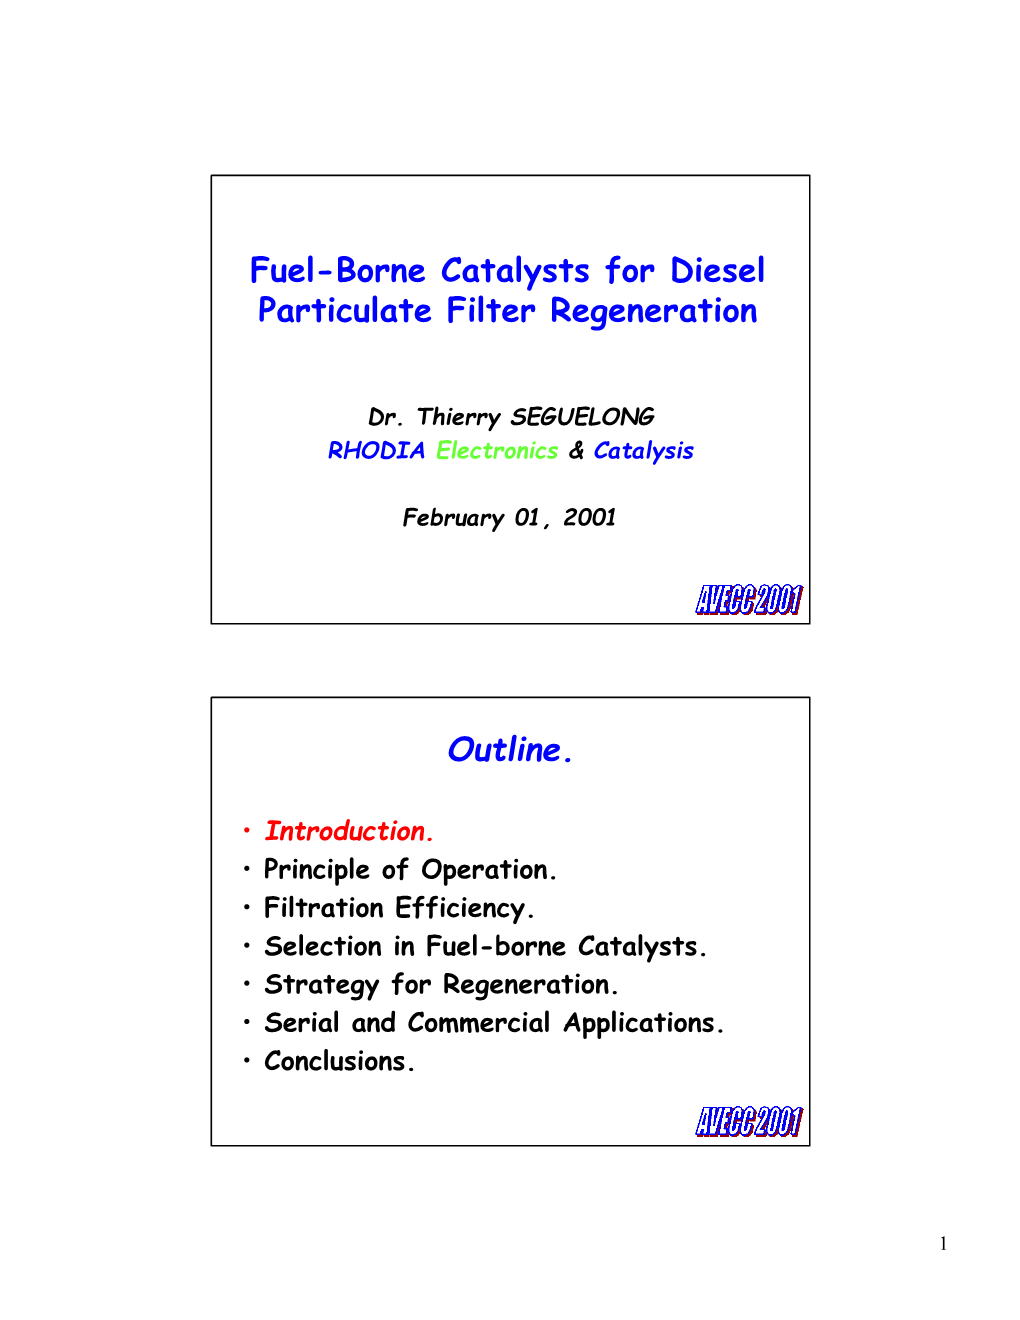 Fuel-Borne Catalysts for Diesel Particulate Filter Regeneration